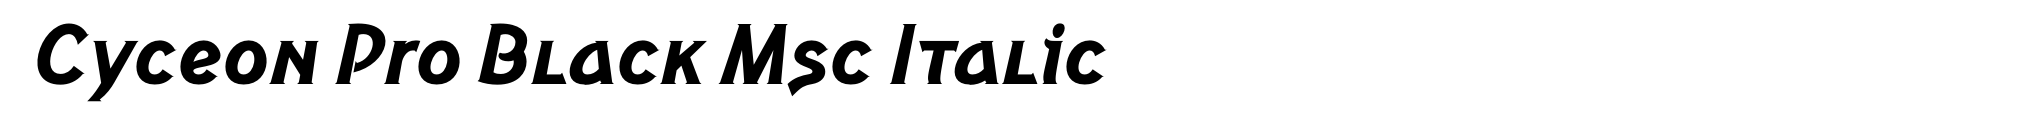 Cyceon Pro Black Msc Italic image